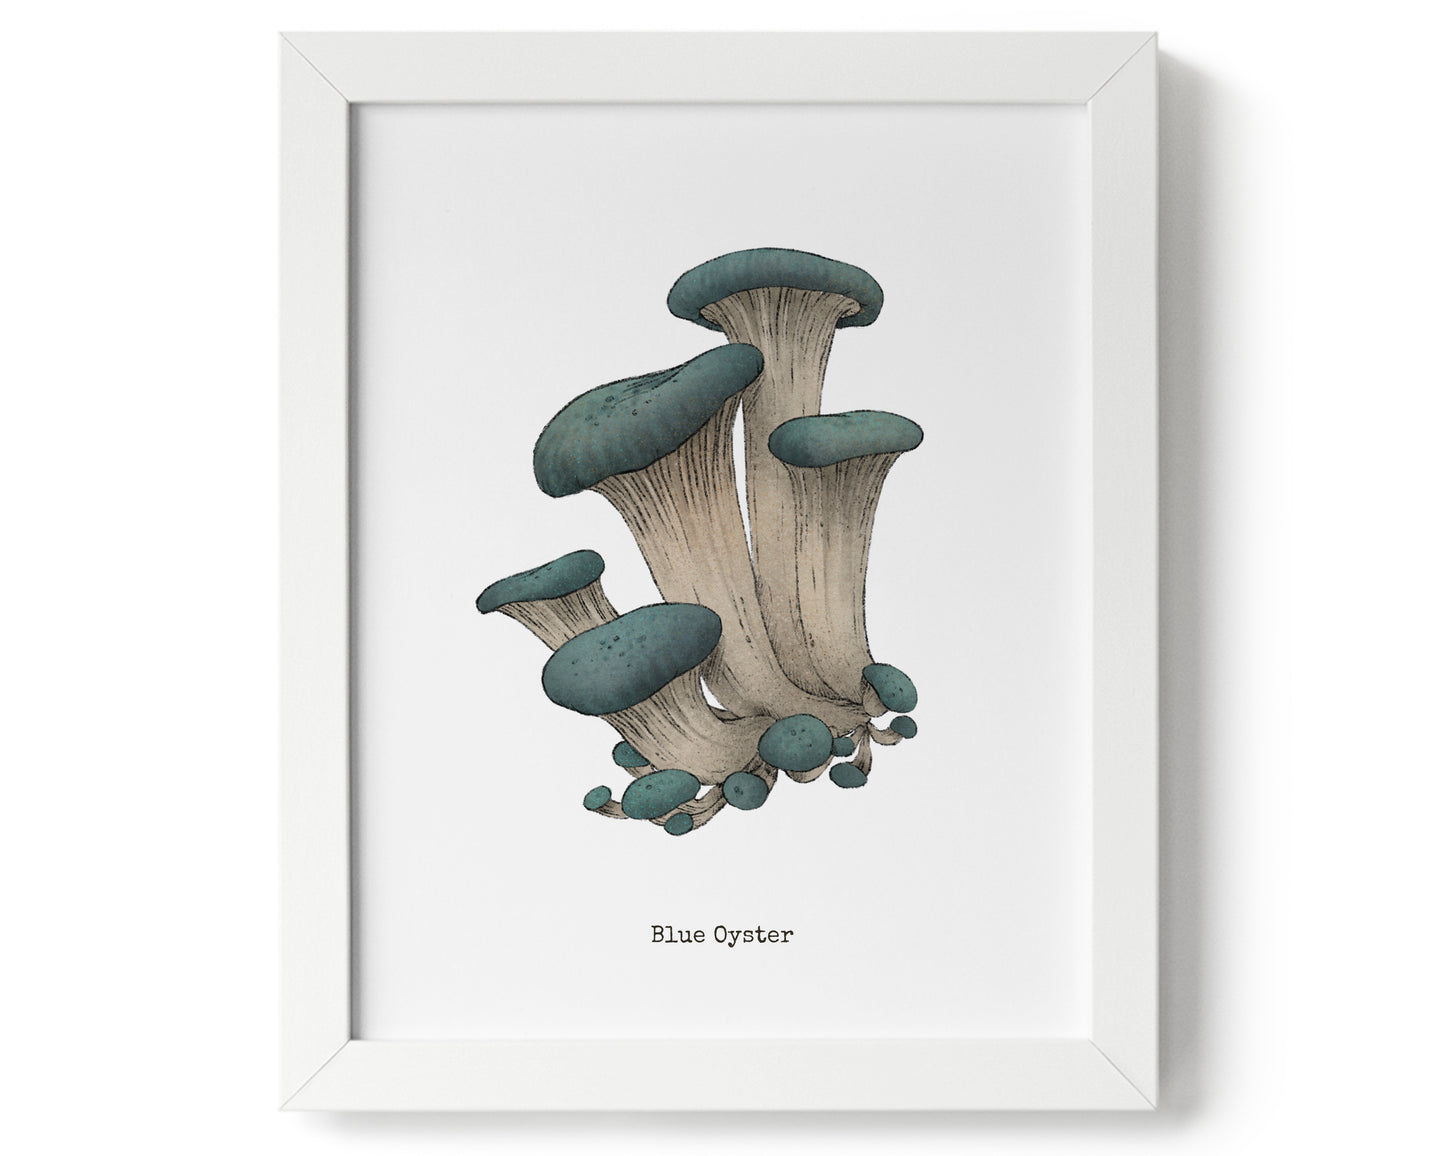 "Blue Oyster" by Catherine Hébert - Blue Oyster Mushroom Art Print - 9"x9" size